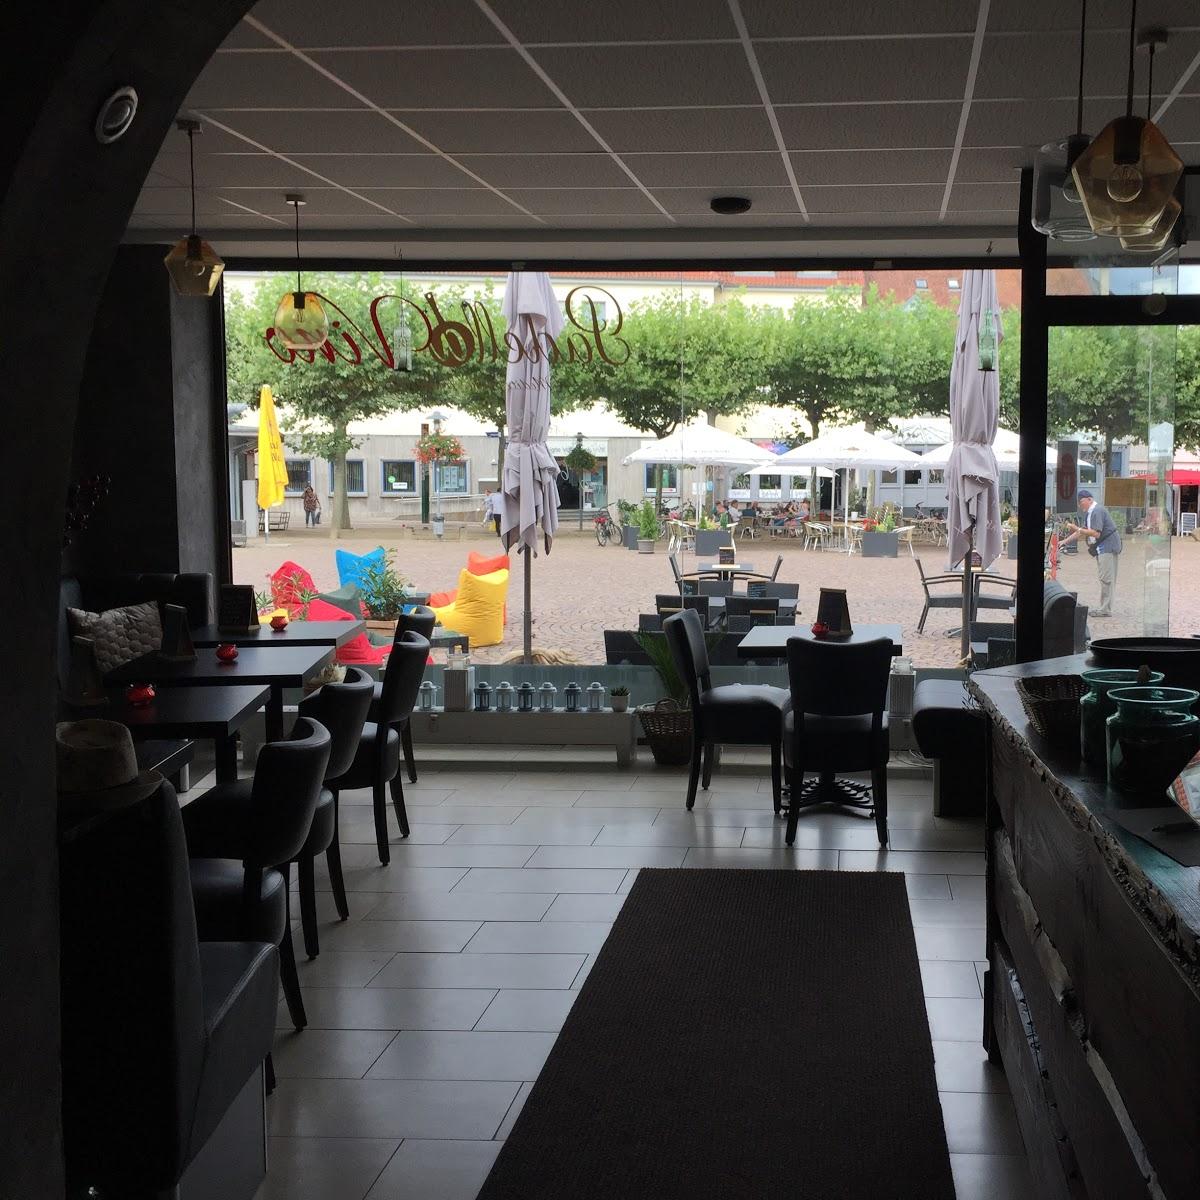 Restaurant "Padella Vino" in Dieburg